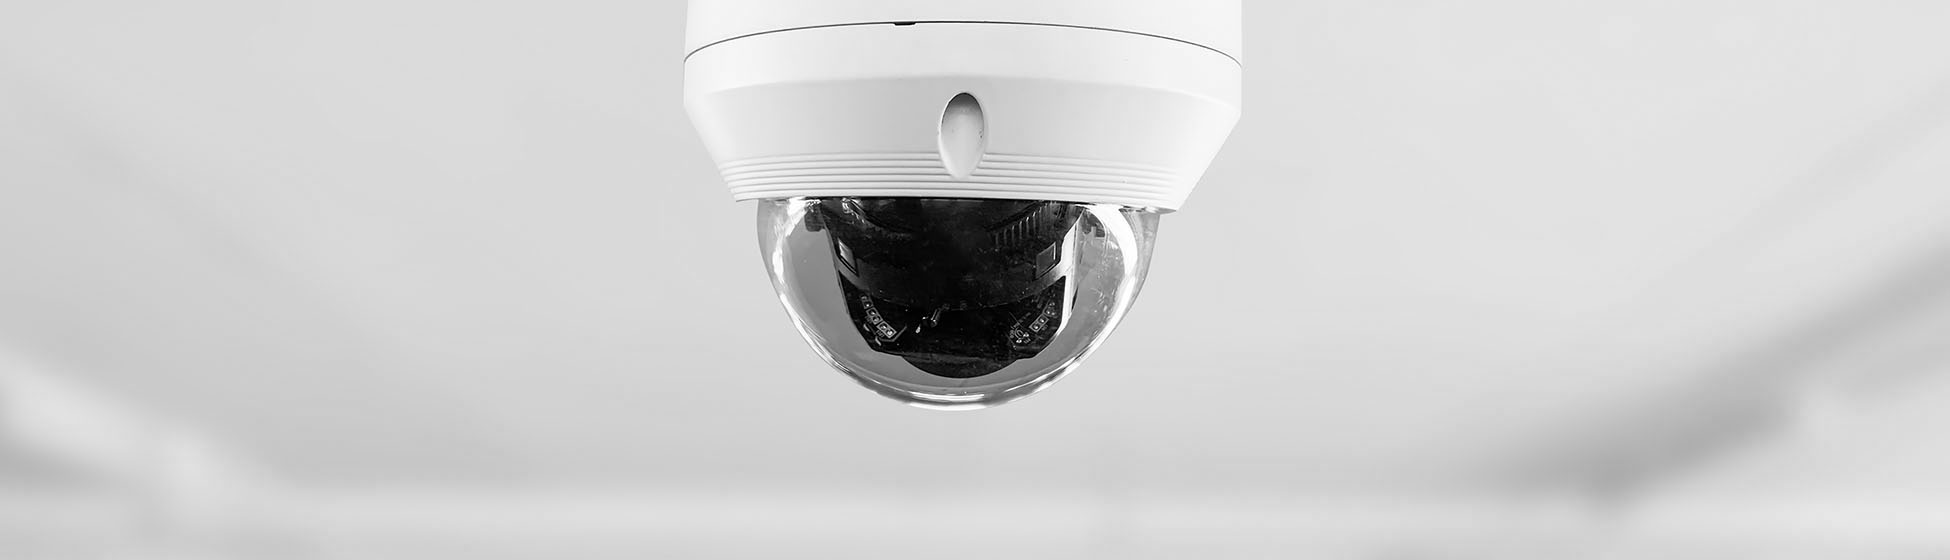 Tarif installation video surveillance